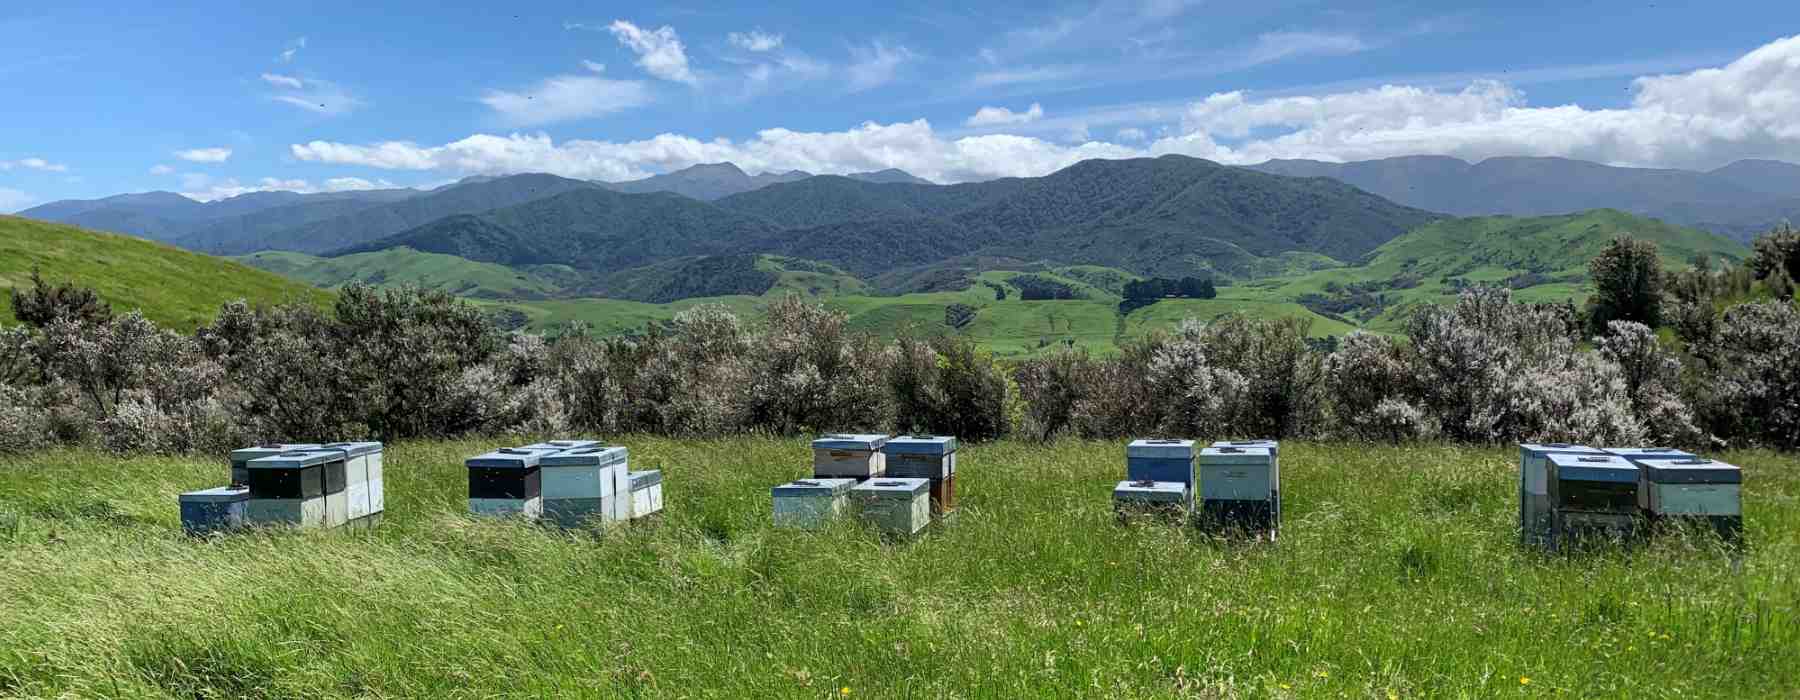 Mountain Gold Manuka Honey Bee Hives and mountains